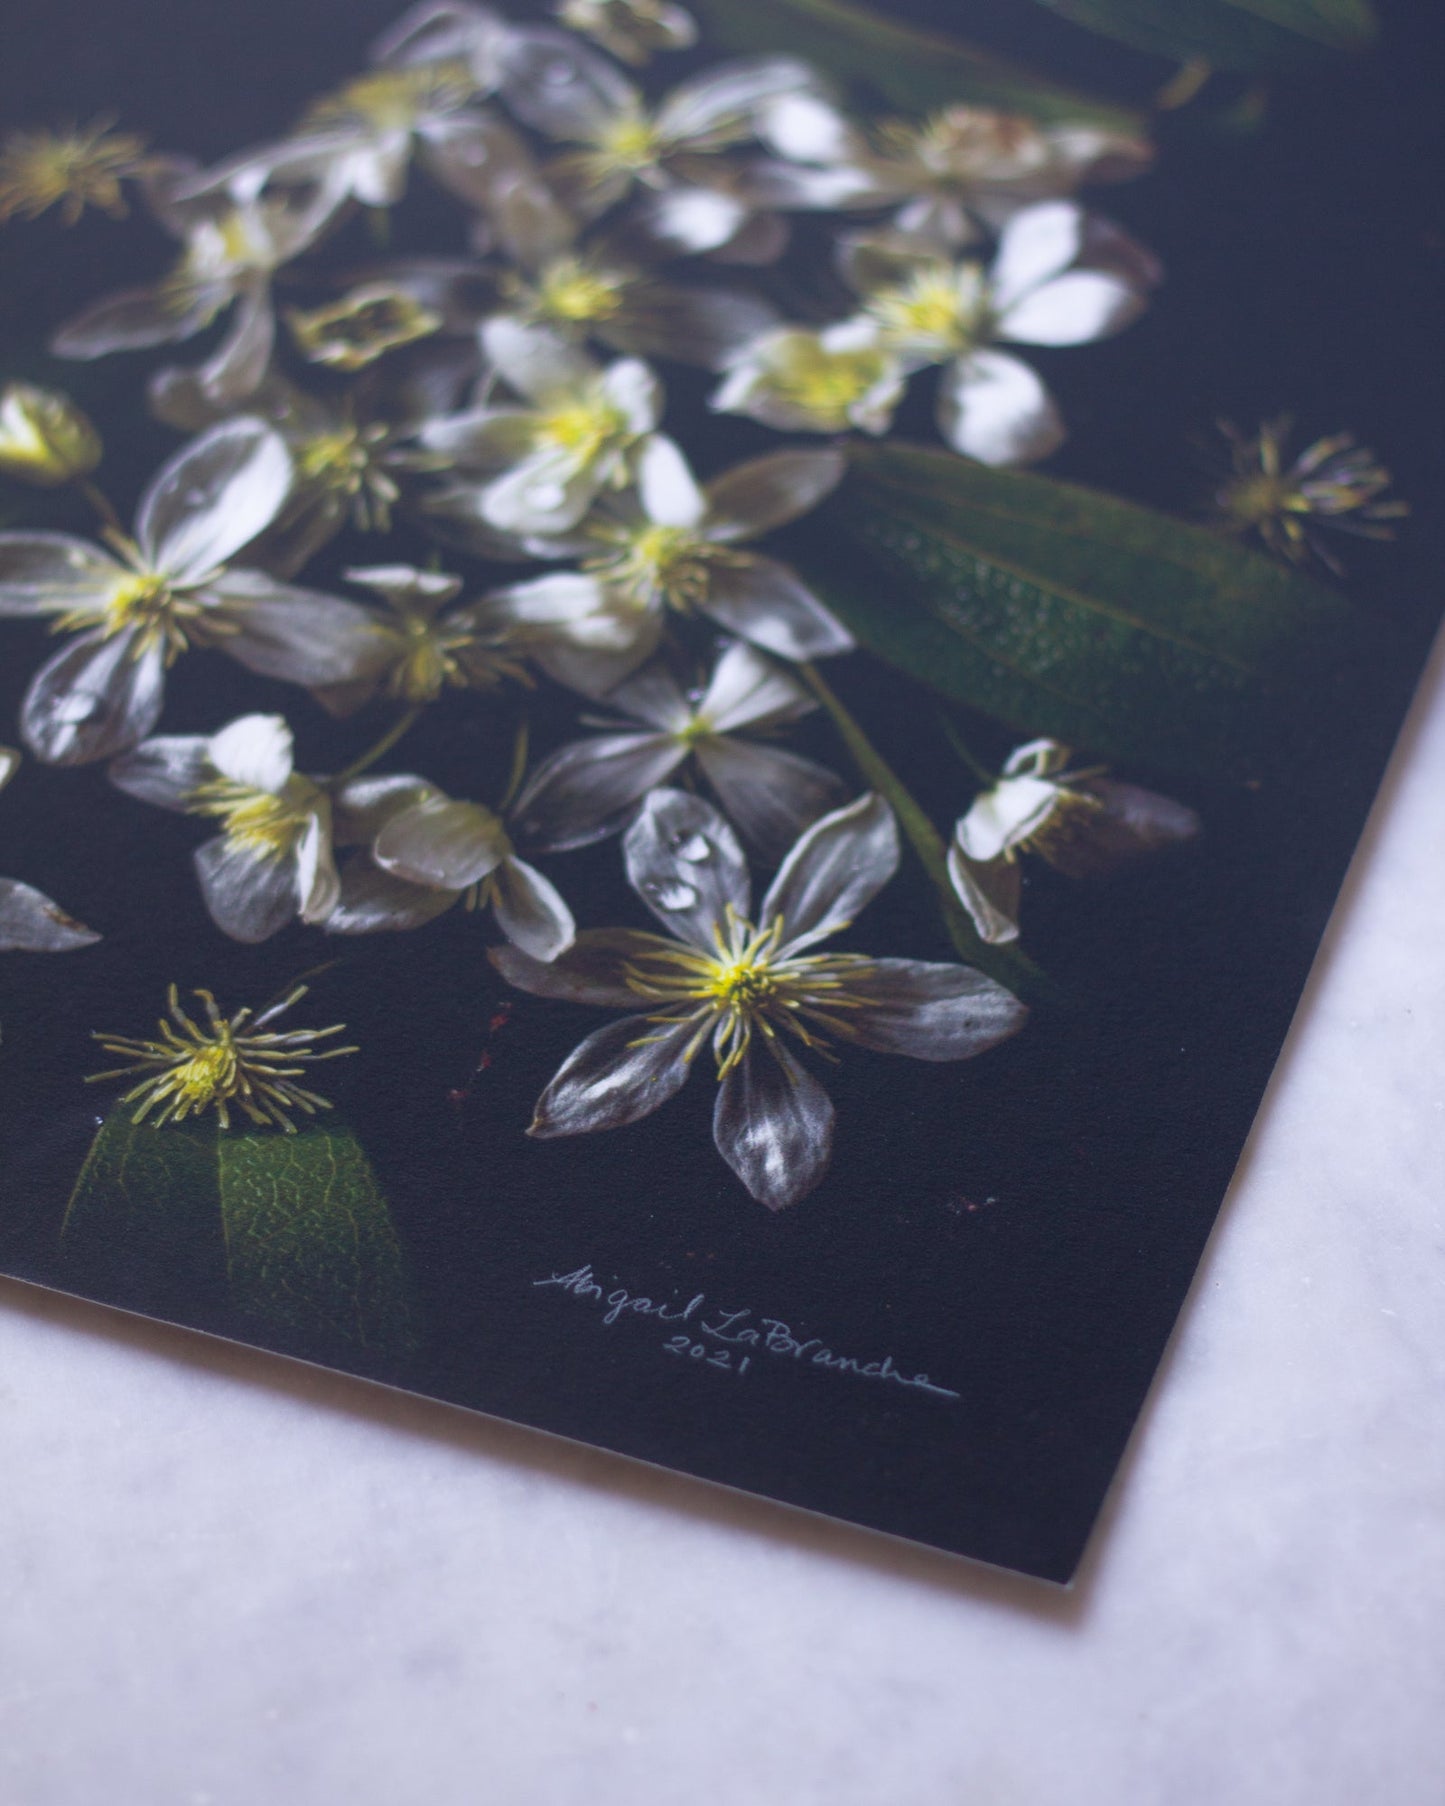 Garden Radicchio & Wild Almond Blossoms Limited Edition Print